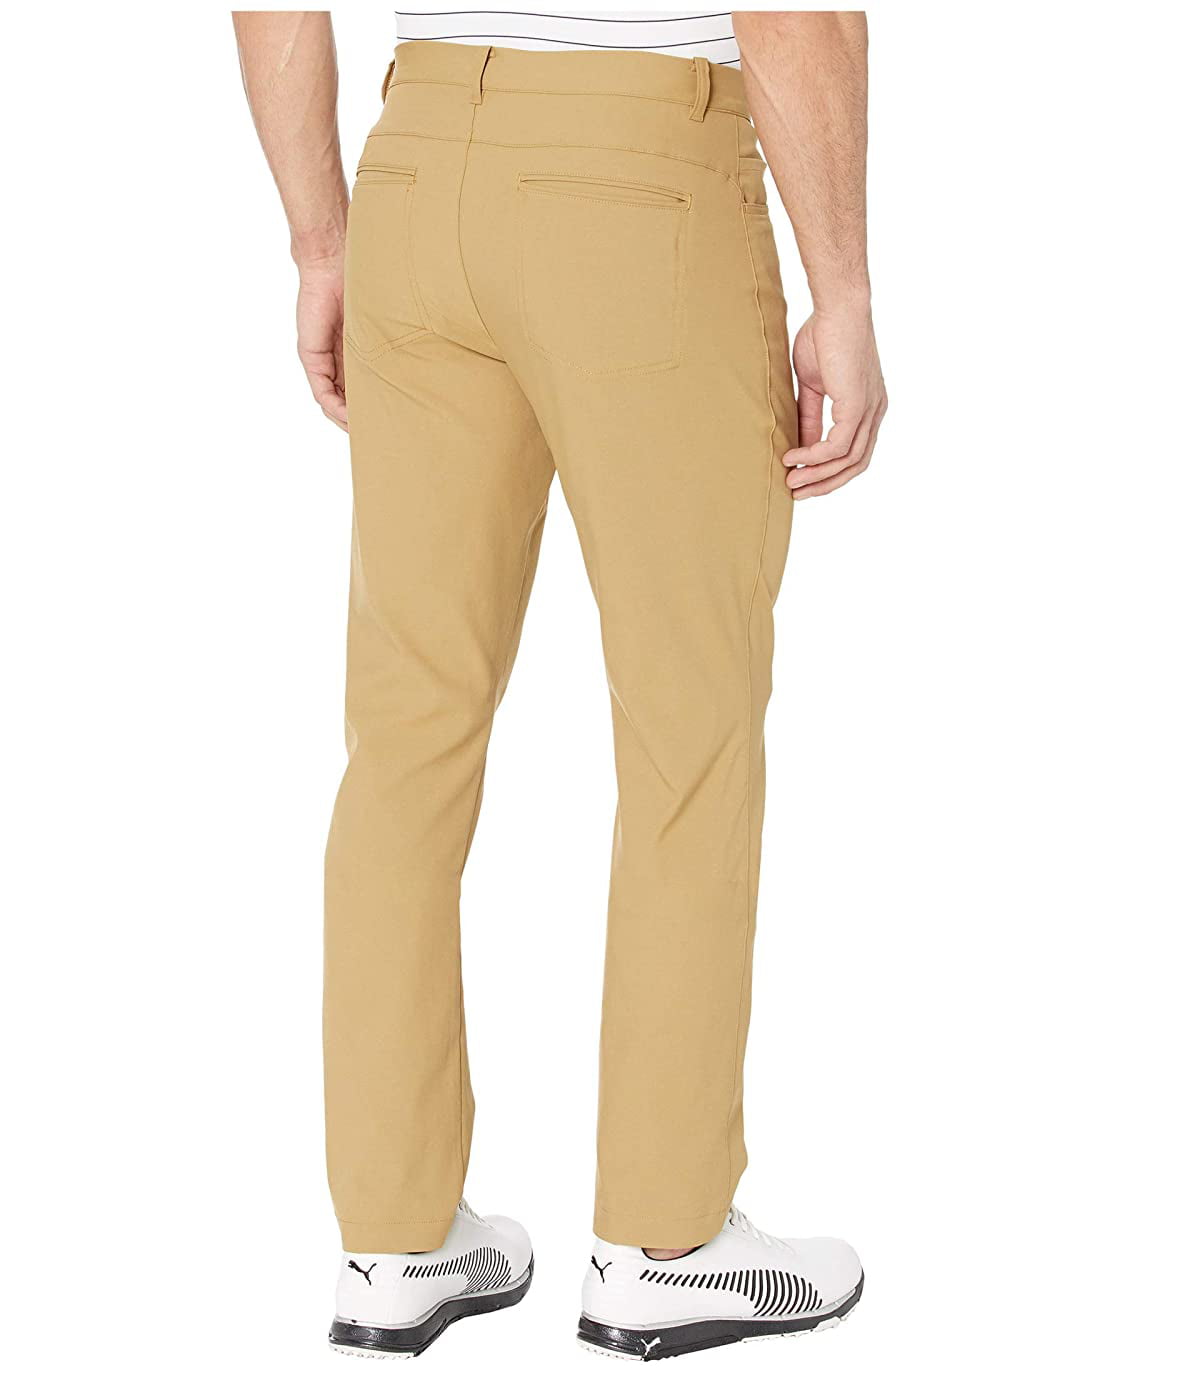 puma 5 pocket golf trousers